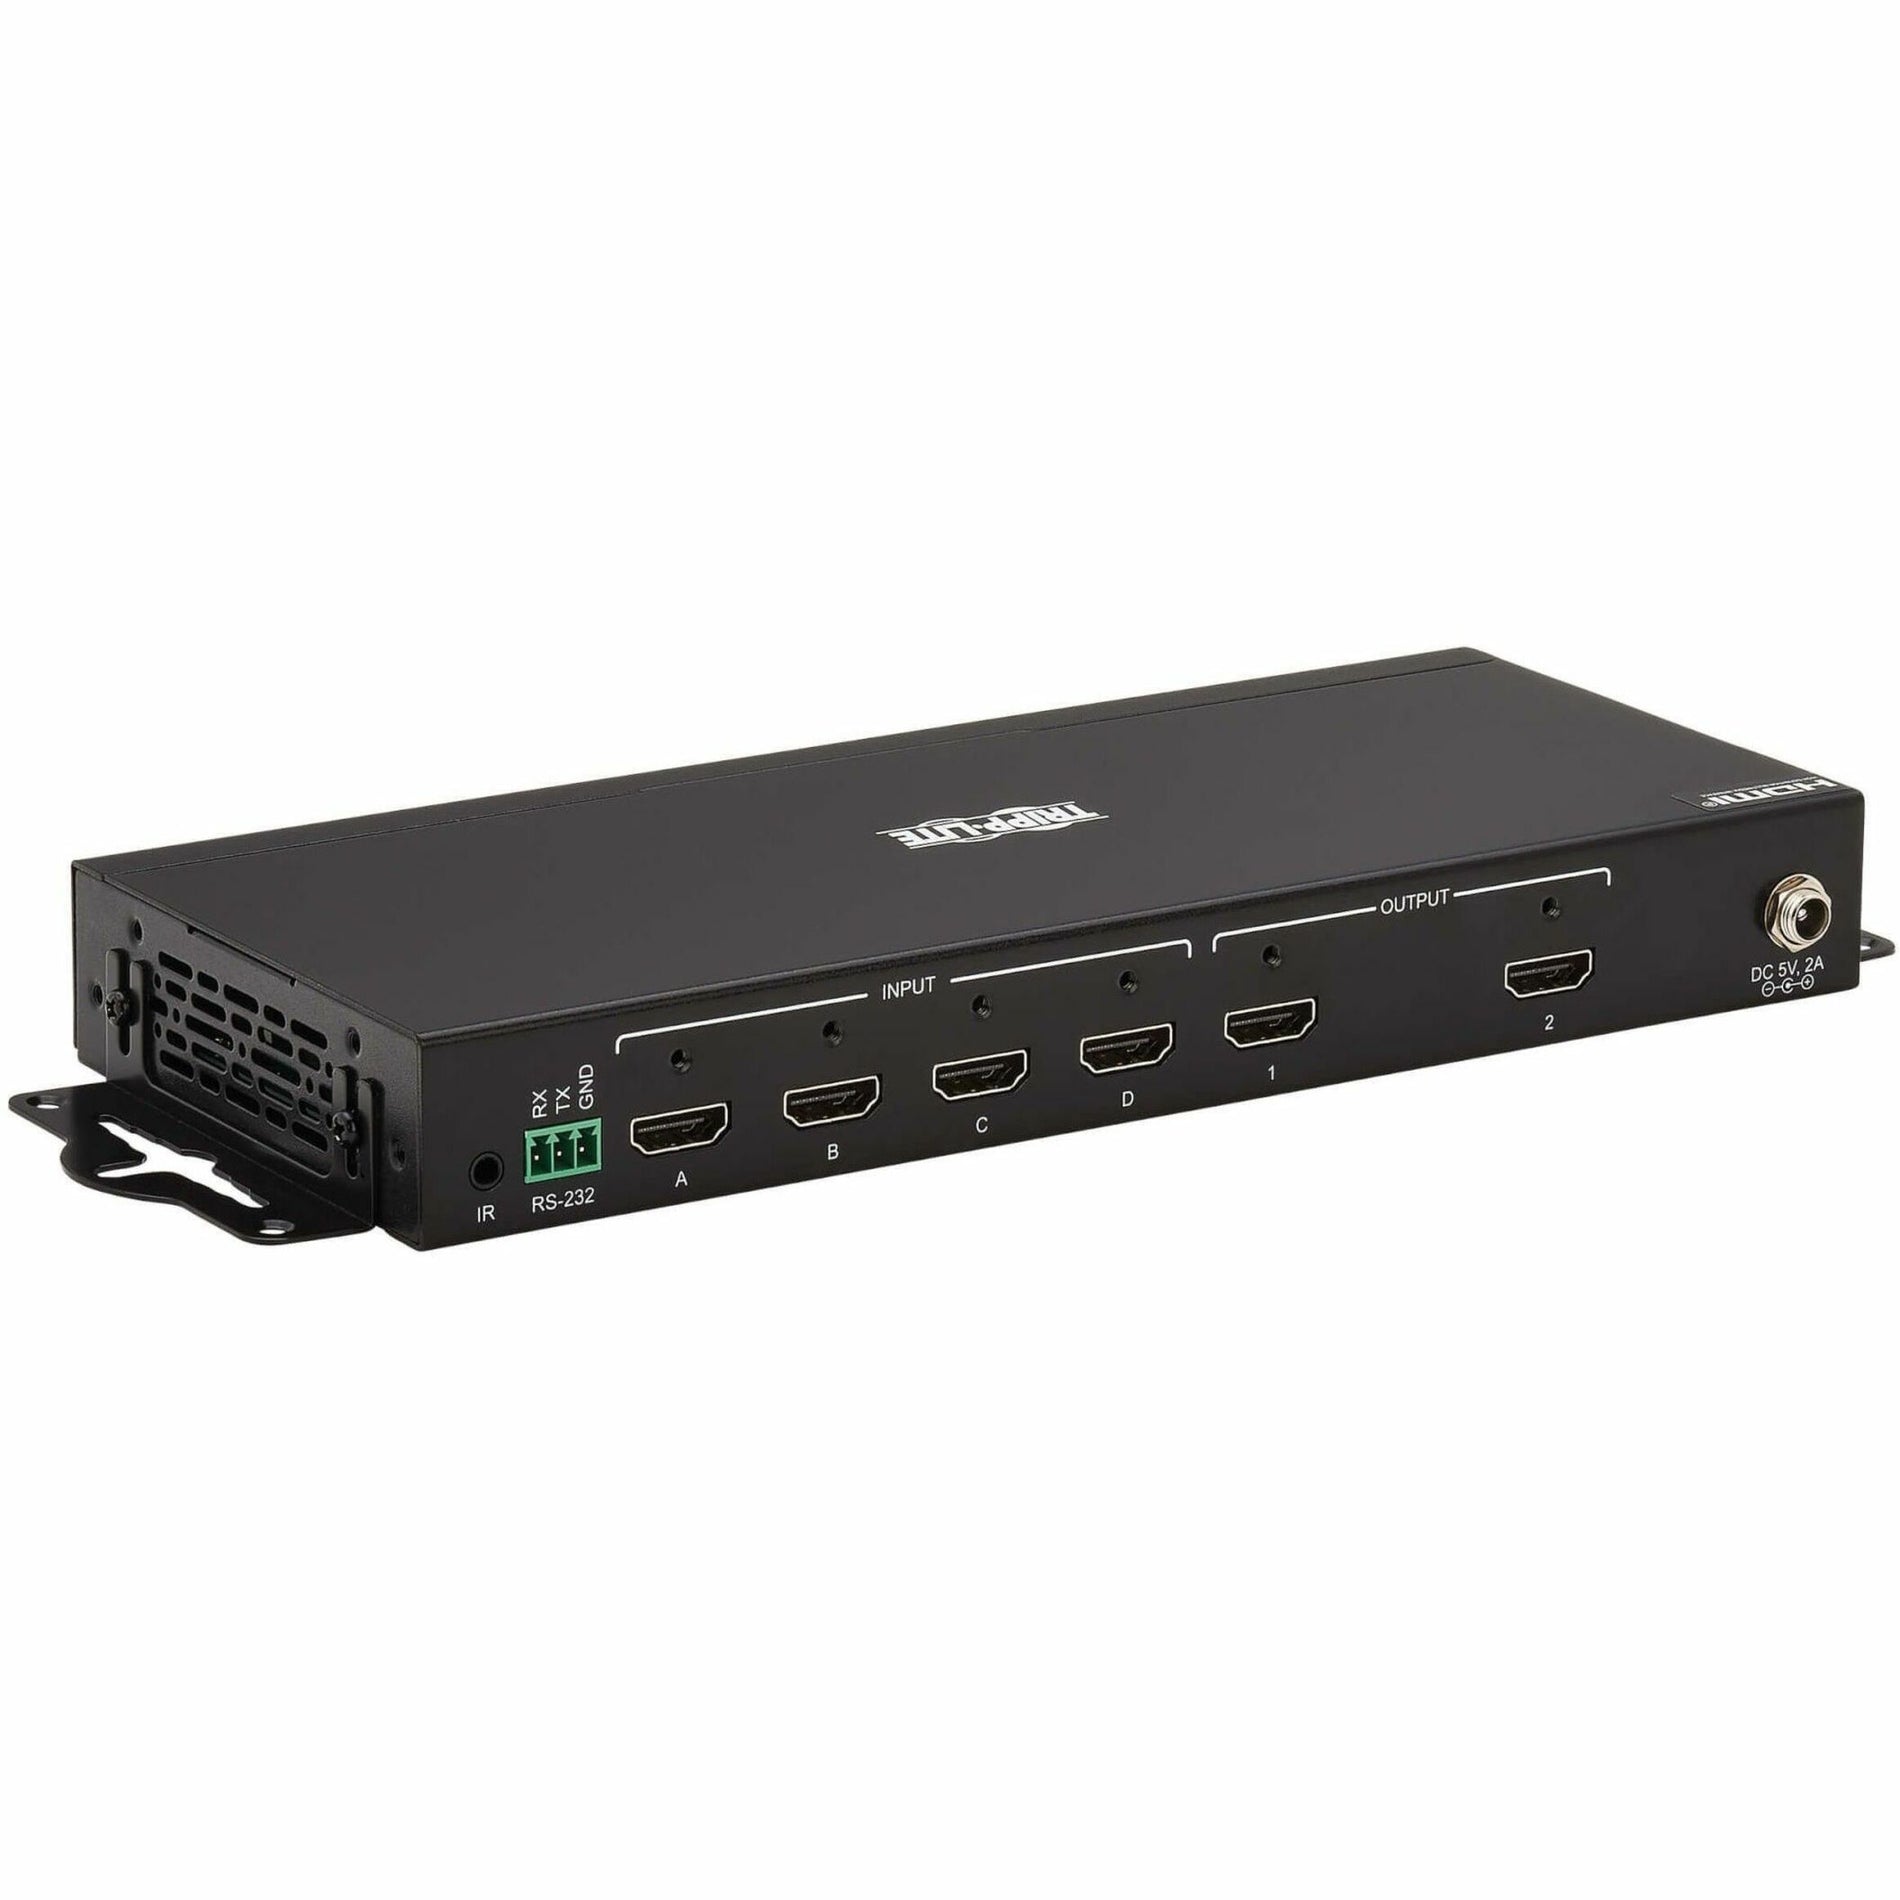 Tripp Lite B119-4X2-4K 4x2 HDMI Matrix Switch/Splitter, 4K Video Switchbox